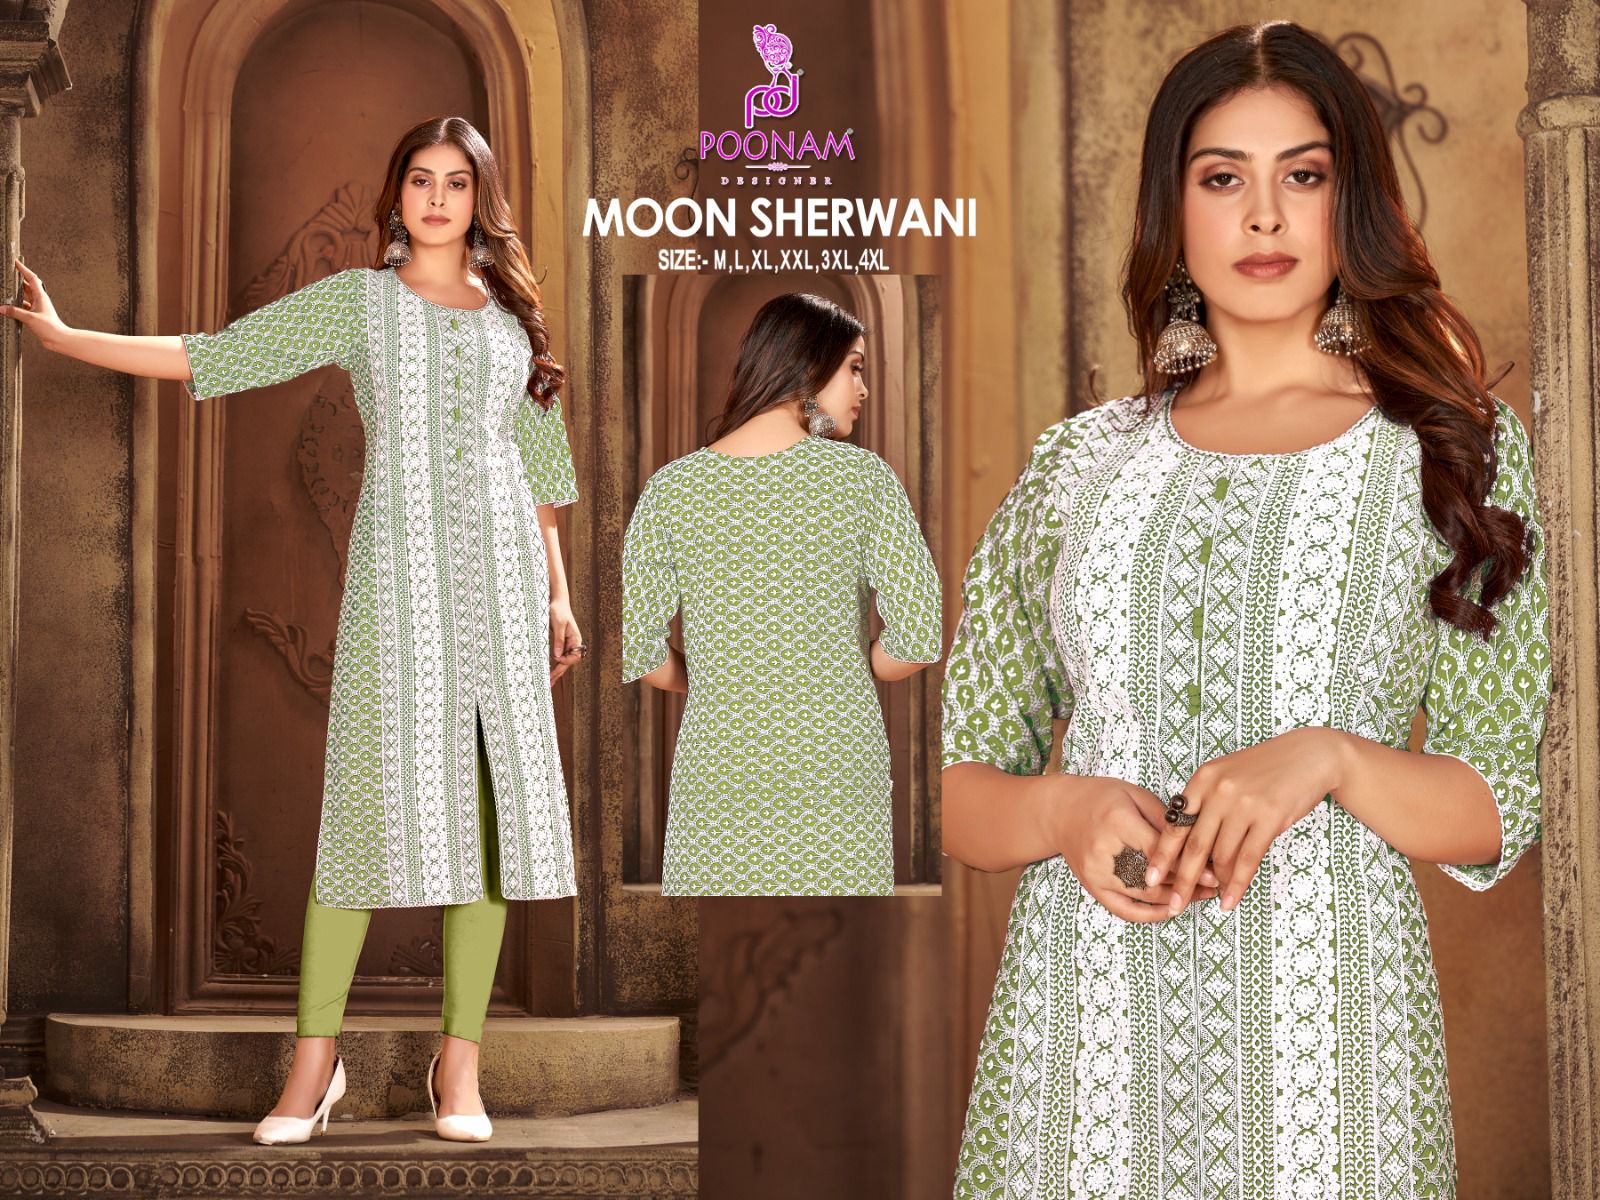 Poonam Designer Moon Sherwani 1002